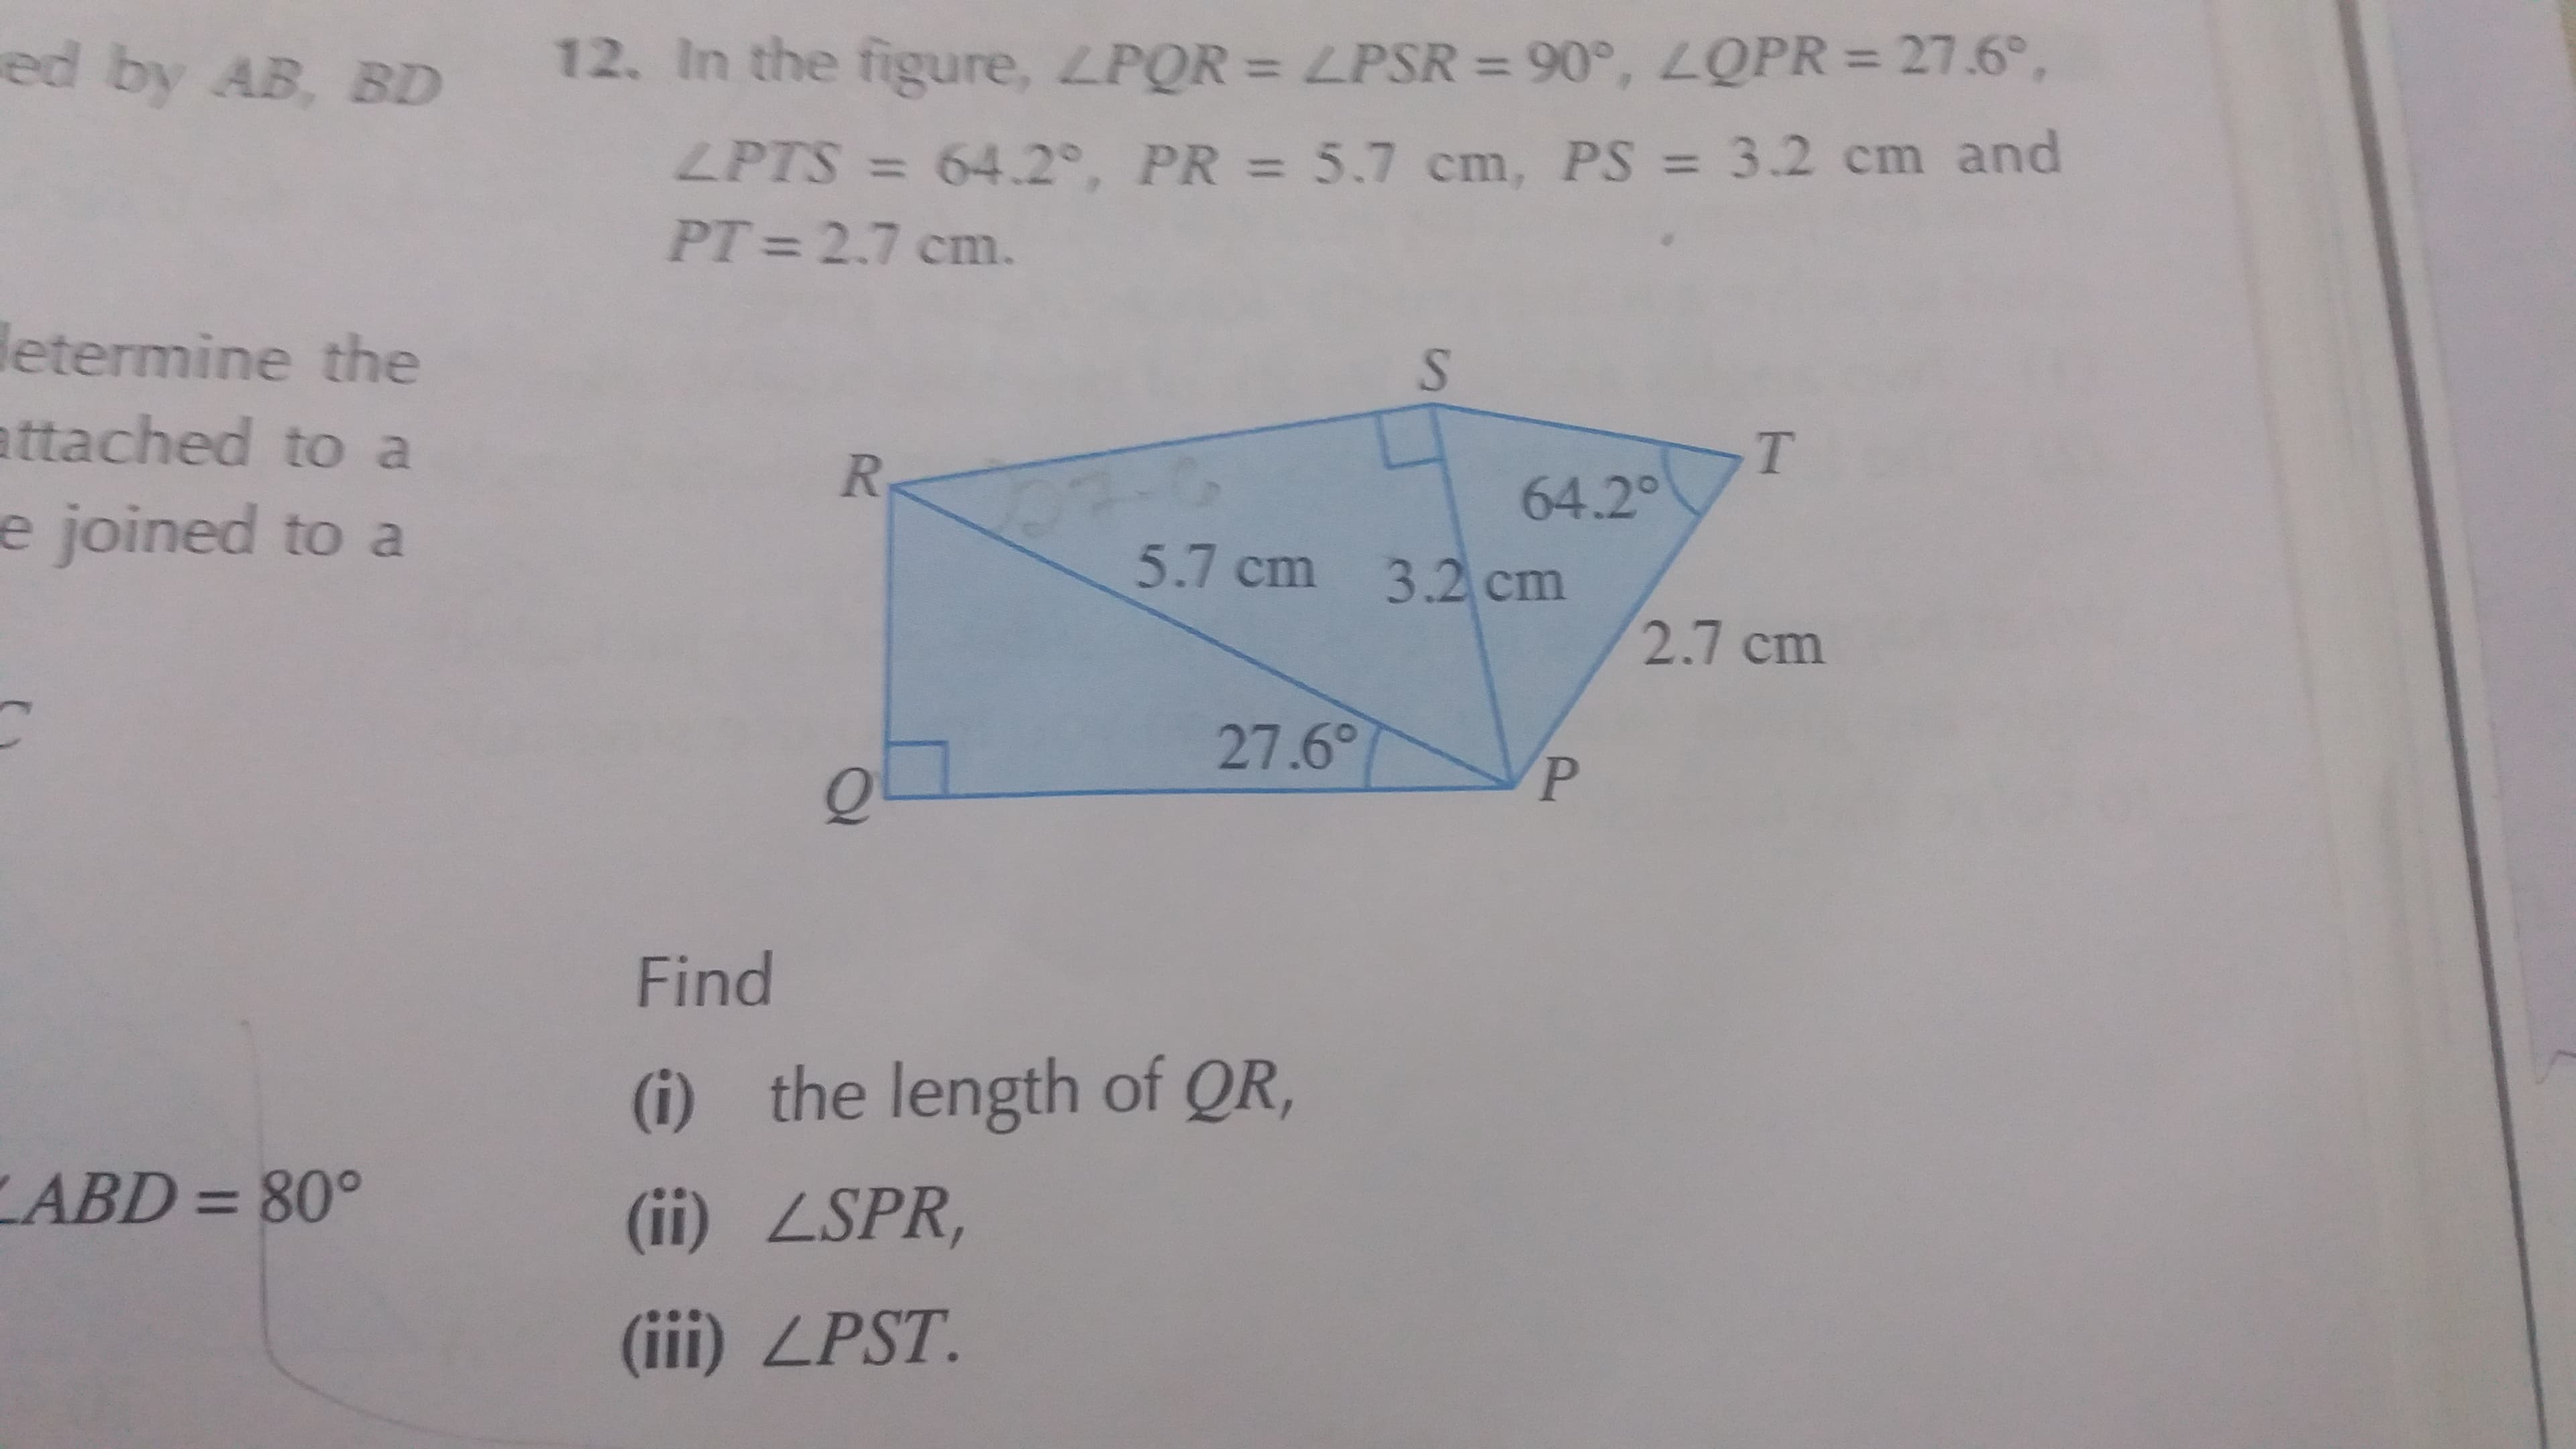 Find
(i) the length of QR,
